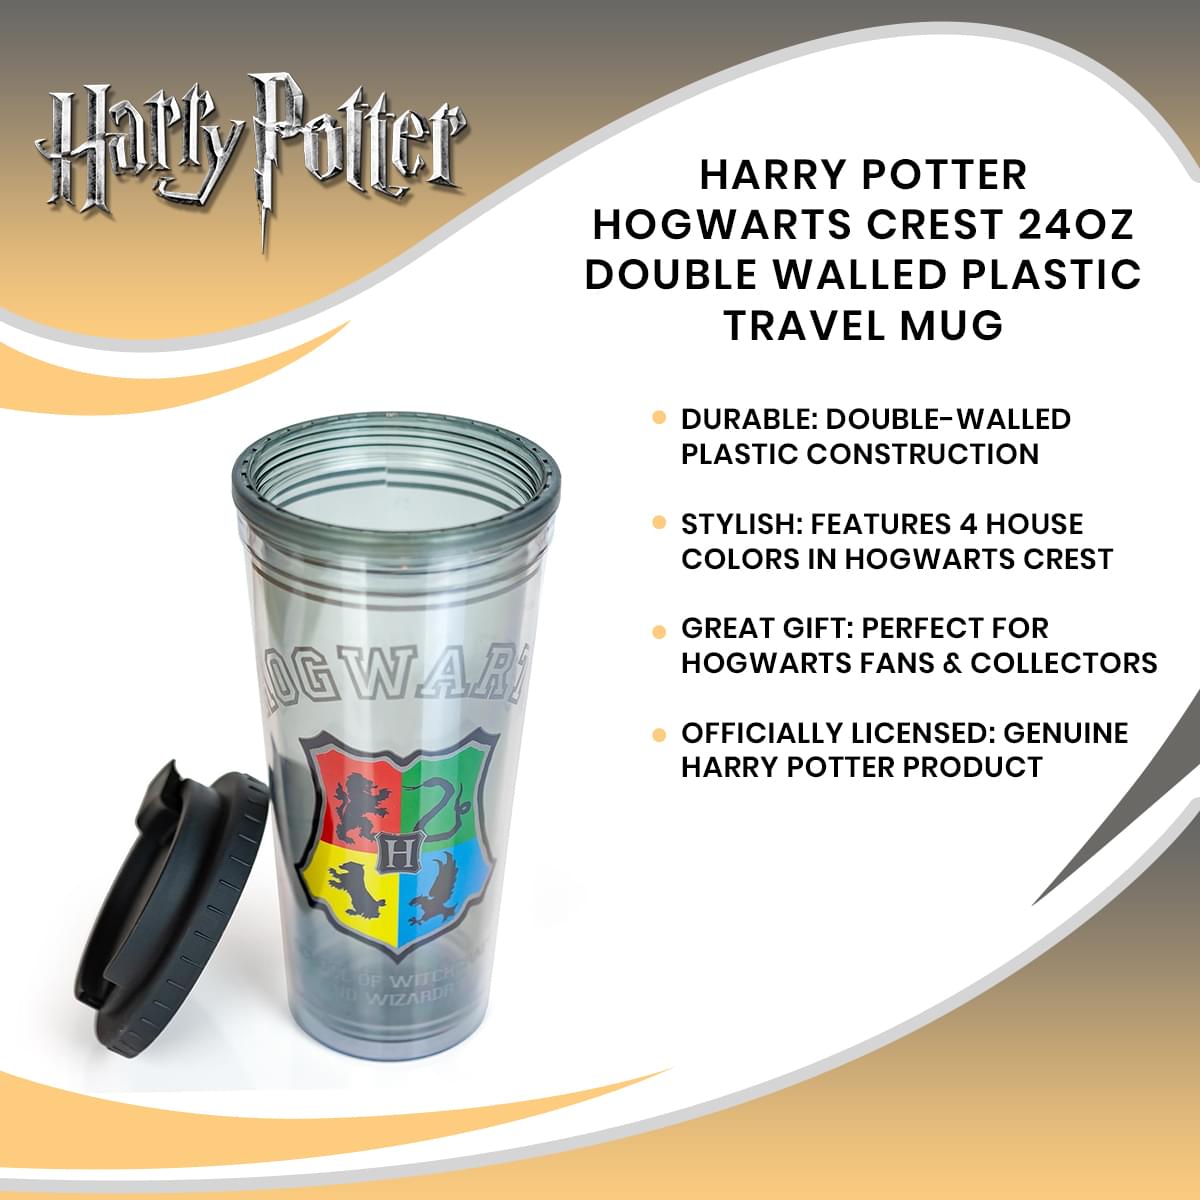 Harry Potter Hogwarts Crest 24oz Double Walled Plastic Travel Mug